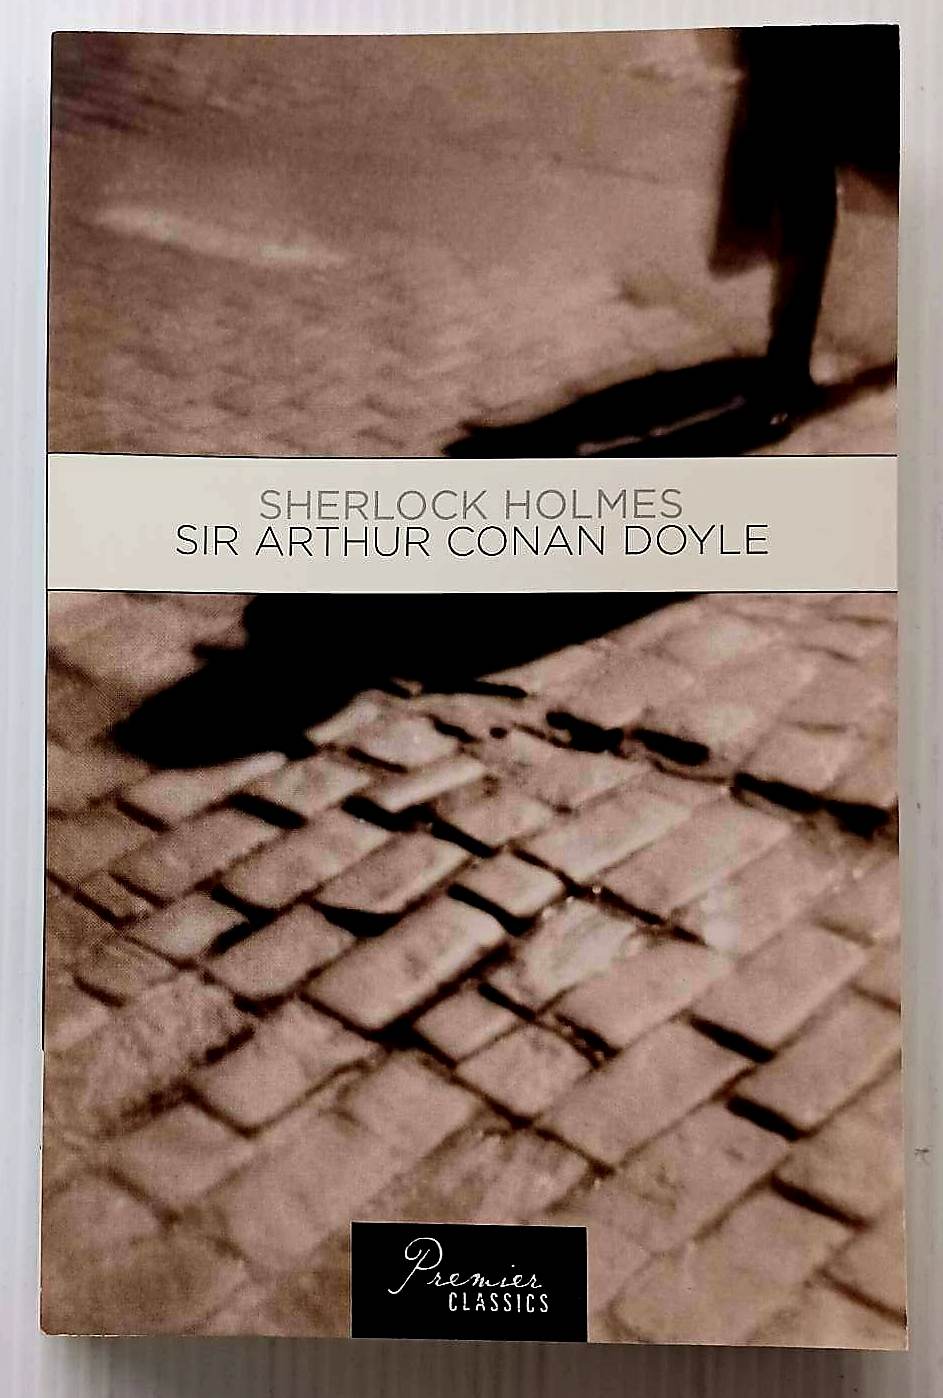 SHERLOCK HOLMES - Sir Arthur Conan Doyle